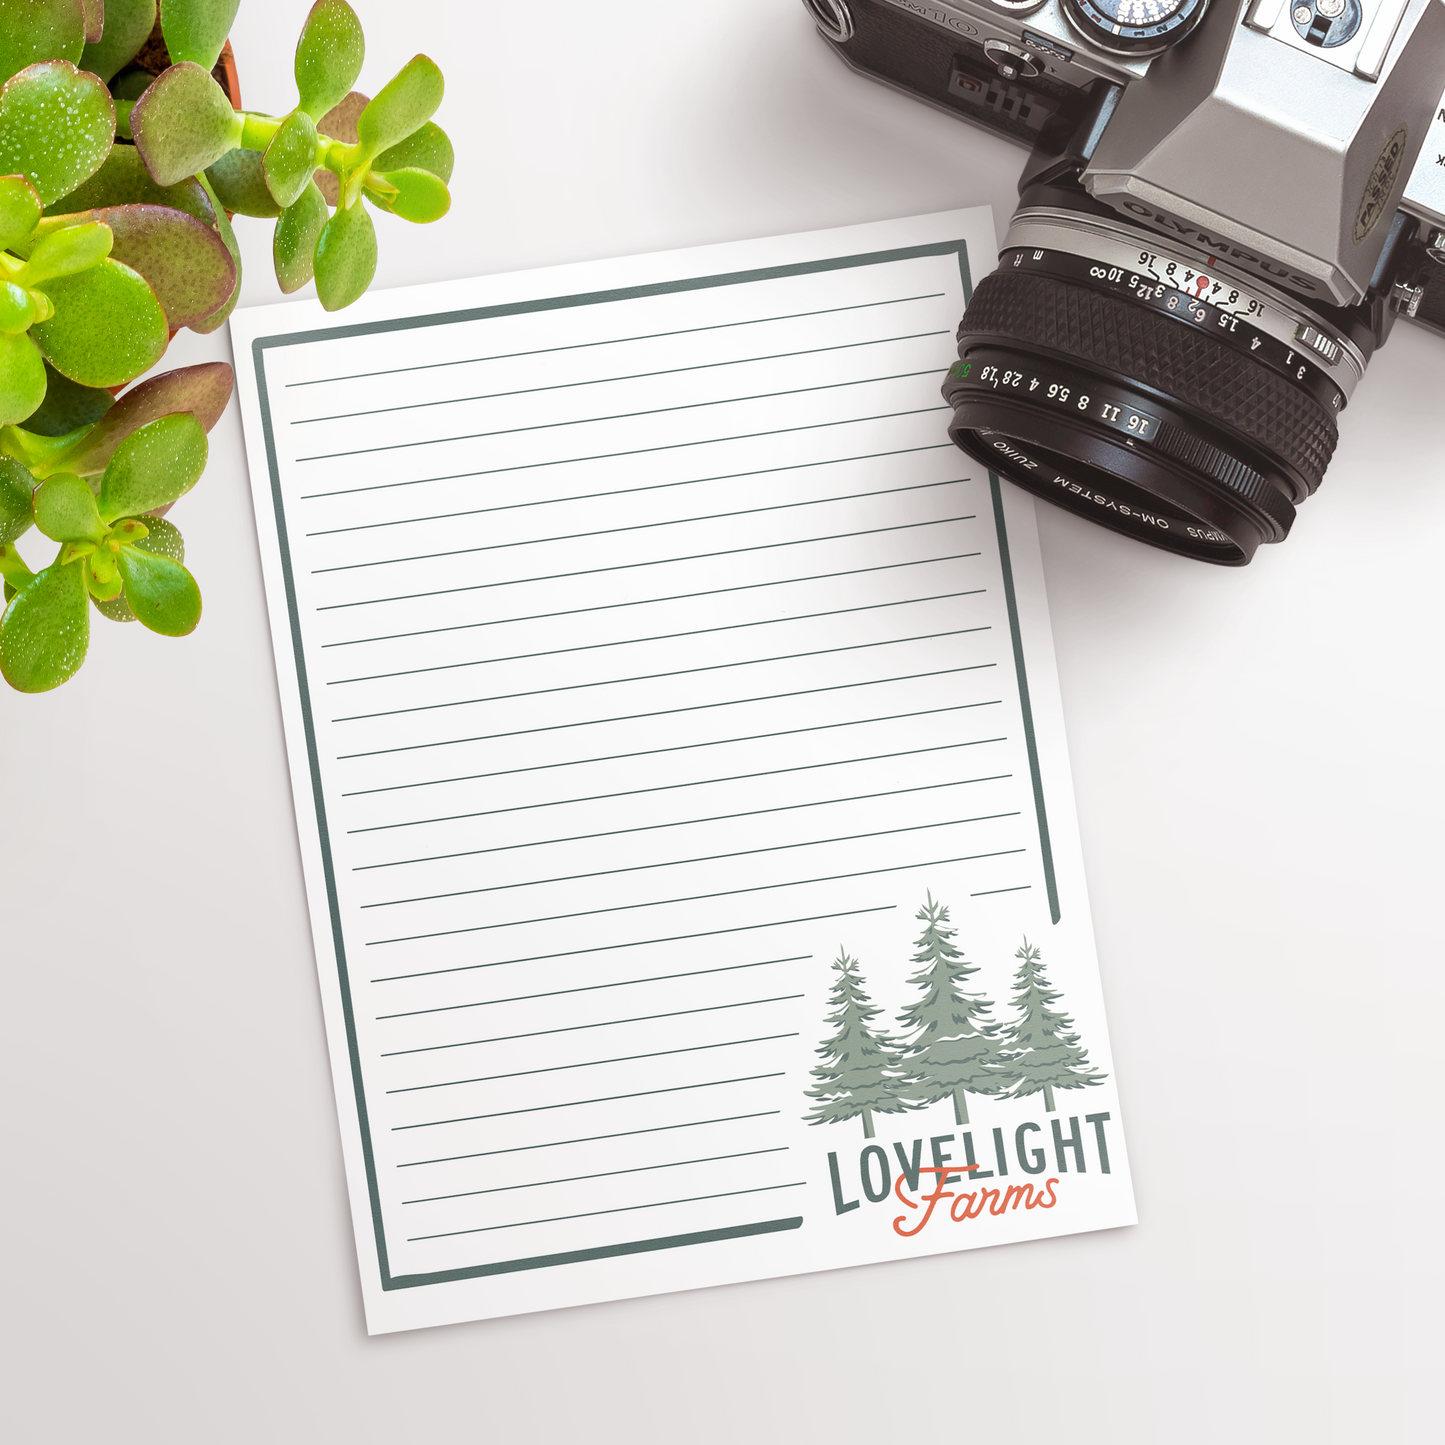 Lovelight Farms Logo Notepad - Officially Licensed Lovelight Farms